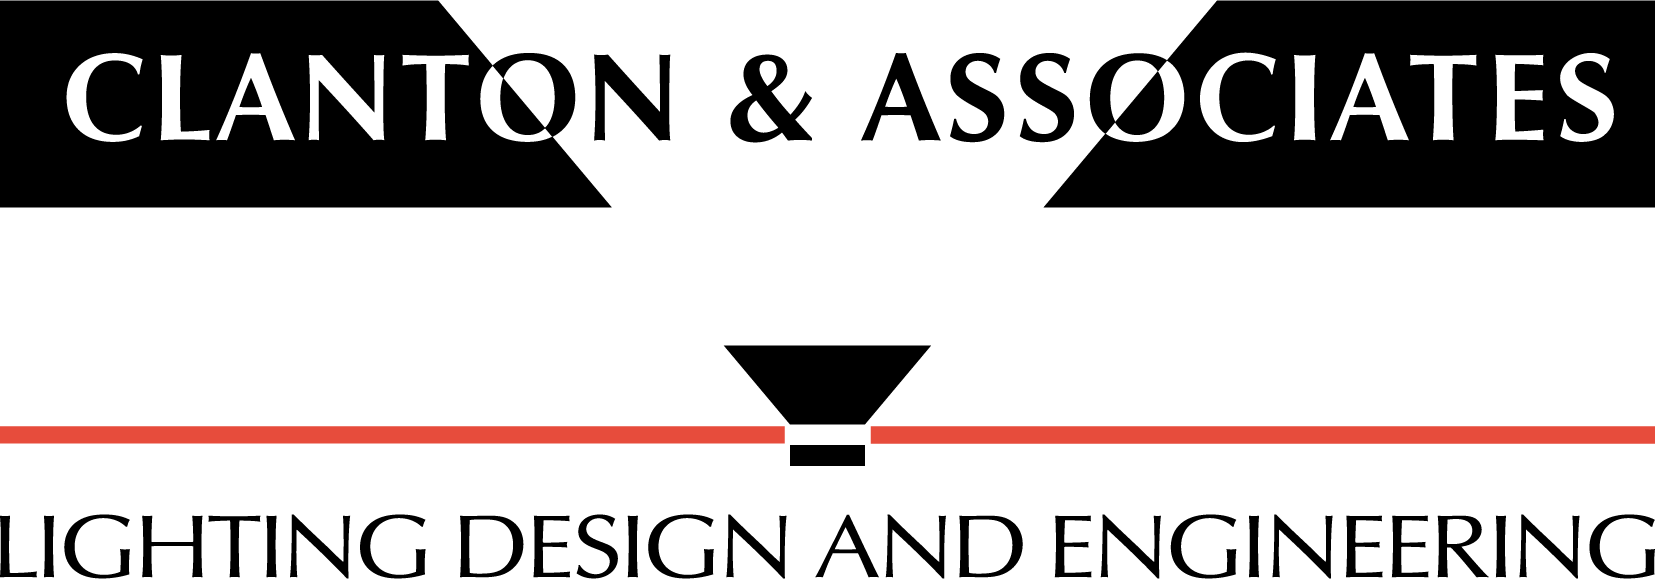 Clanton & Associates Logo.png